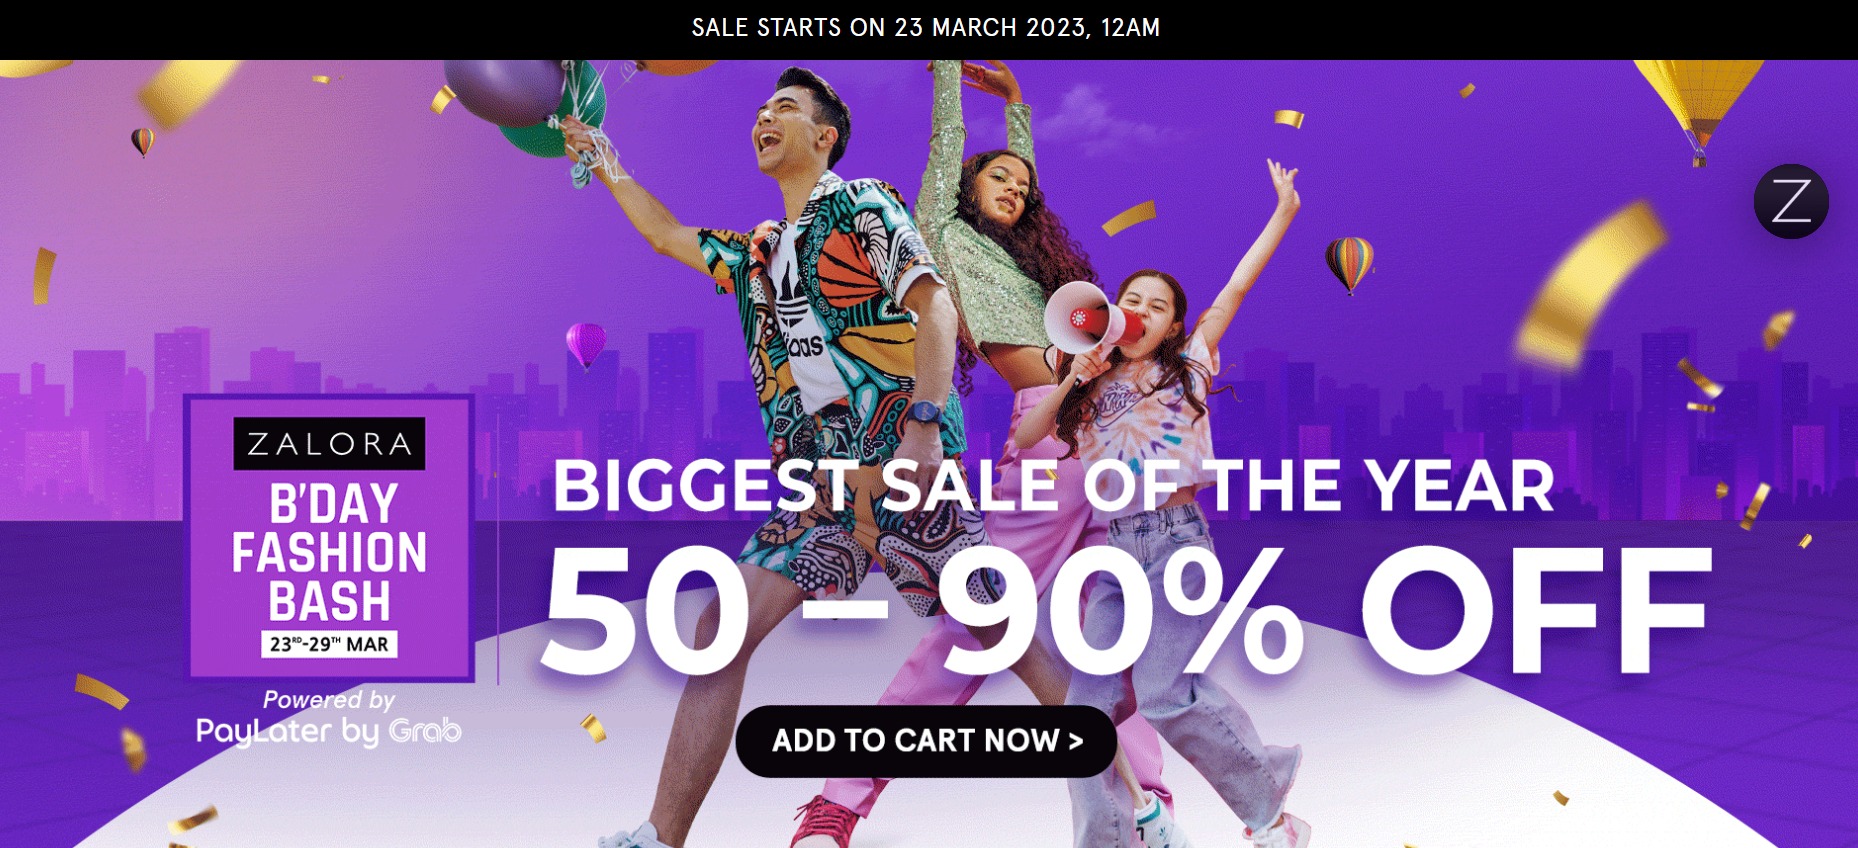 Zalora-Birthday-Deals-UP-TO-90-OFF-ZALORA-SG 23-29 Mar 2023: ZALORA B'Day Fashion Bash Warehouse Sale! Up to 90% OFF Islandwide Singapore